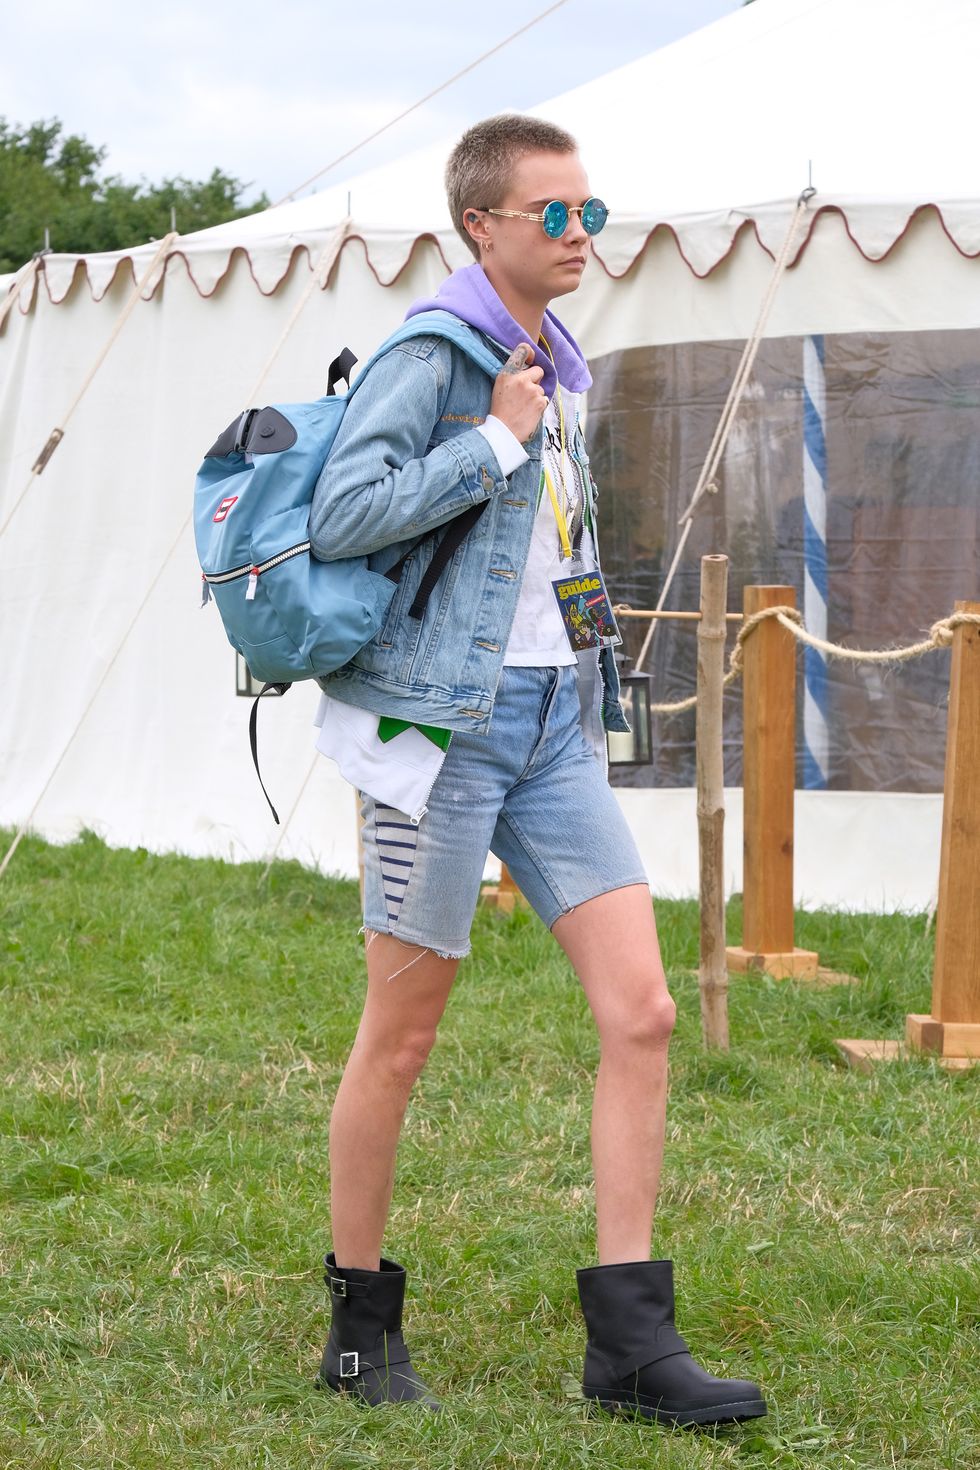 <p><strong data-redactor-tag="strong" data-verified="redactor">台上台下星光熠熠</strong></p><p>在時晴時雨的季節裡，農場裡時常泥濘不堪的場地，反而成為Glastonbury的招牌標記。名模歌手們前來響應音樂時，草地上的時尚穿搭，常成為眾人們目光焦點，無論是Kate Moss的短褲搭配hunter踩在泥濘中的步伐，或是Cara Delvingne的牛仔小男孩時尚，都成為Glastonbury中的經典影像。<span class="redactor-invisible-space" data-verified="redactor" data-redactor-tag="span" data-redactor-class="redactor-invisible-space"></span></p>